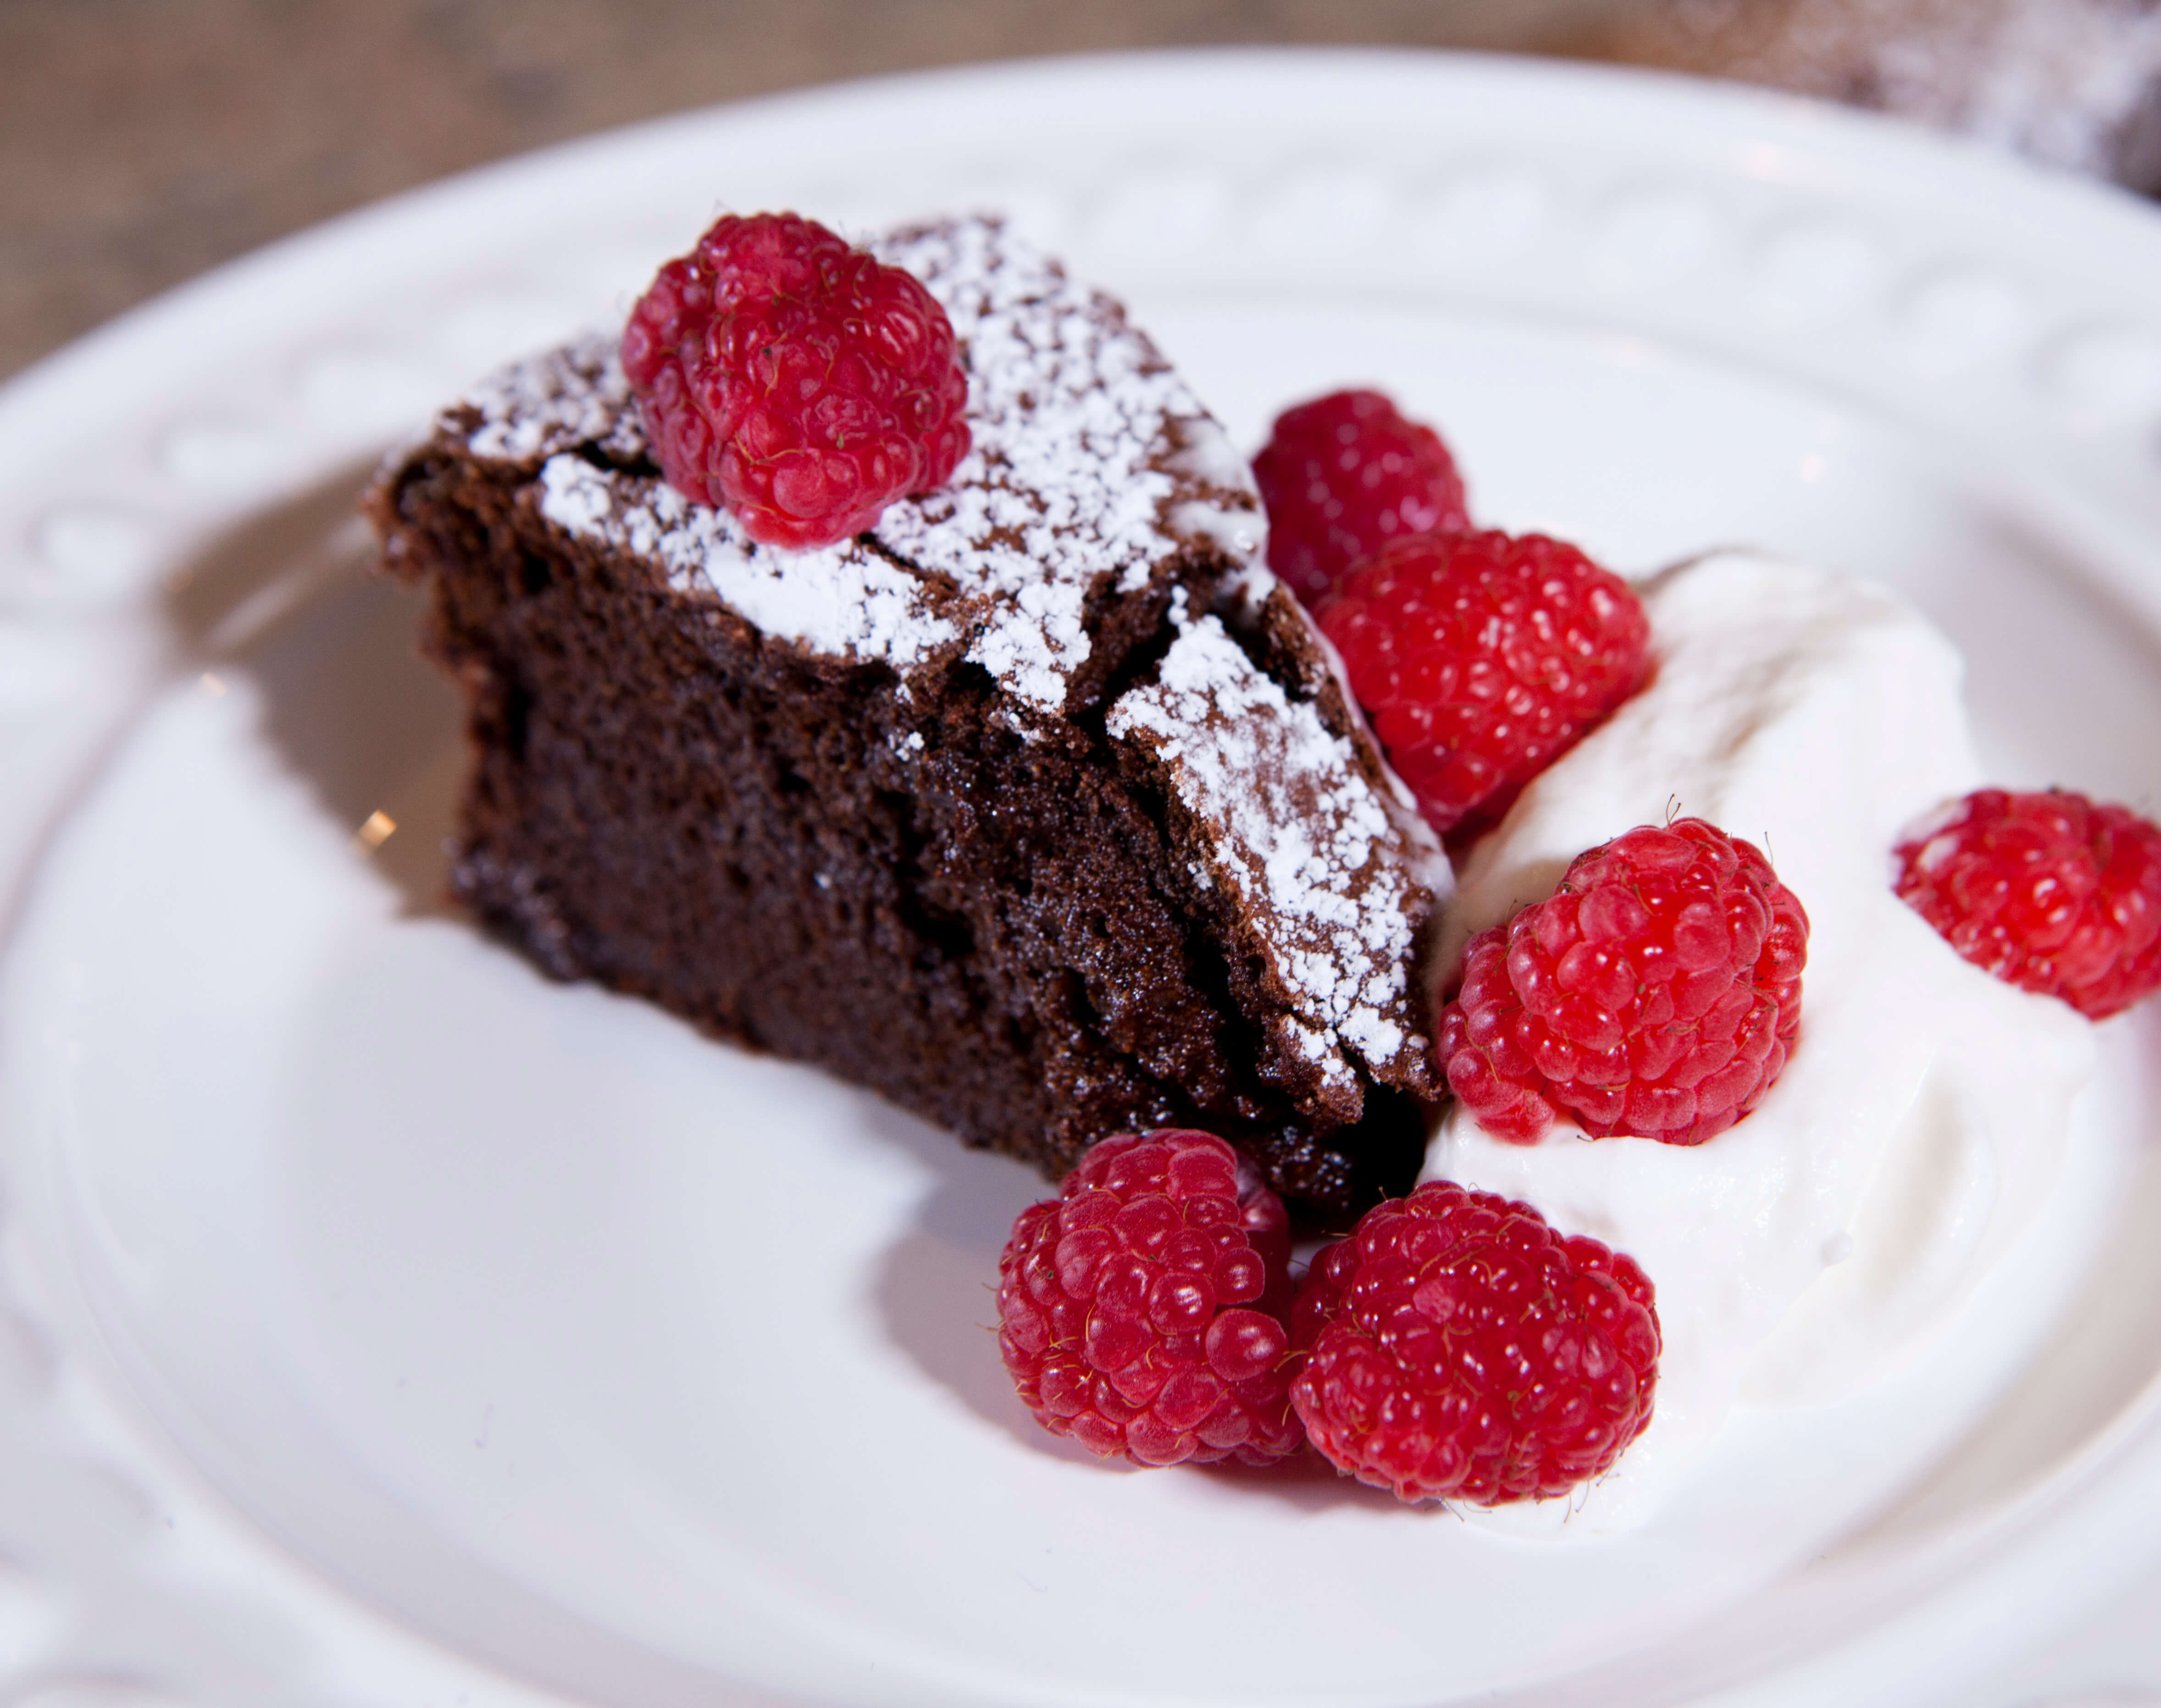 Serve up homemade flourless chocolate cake to your valentine